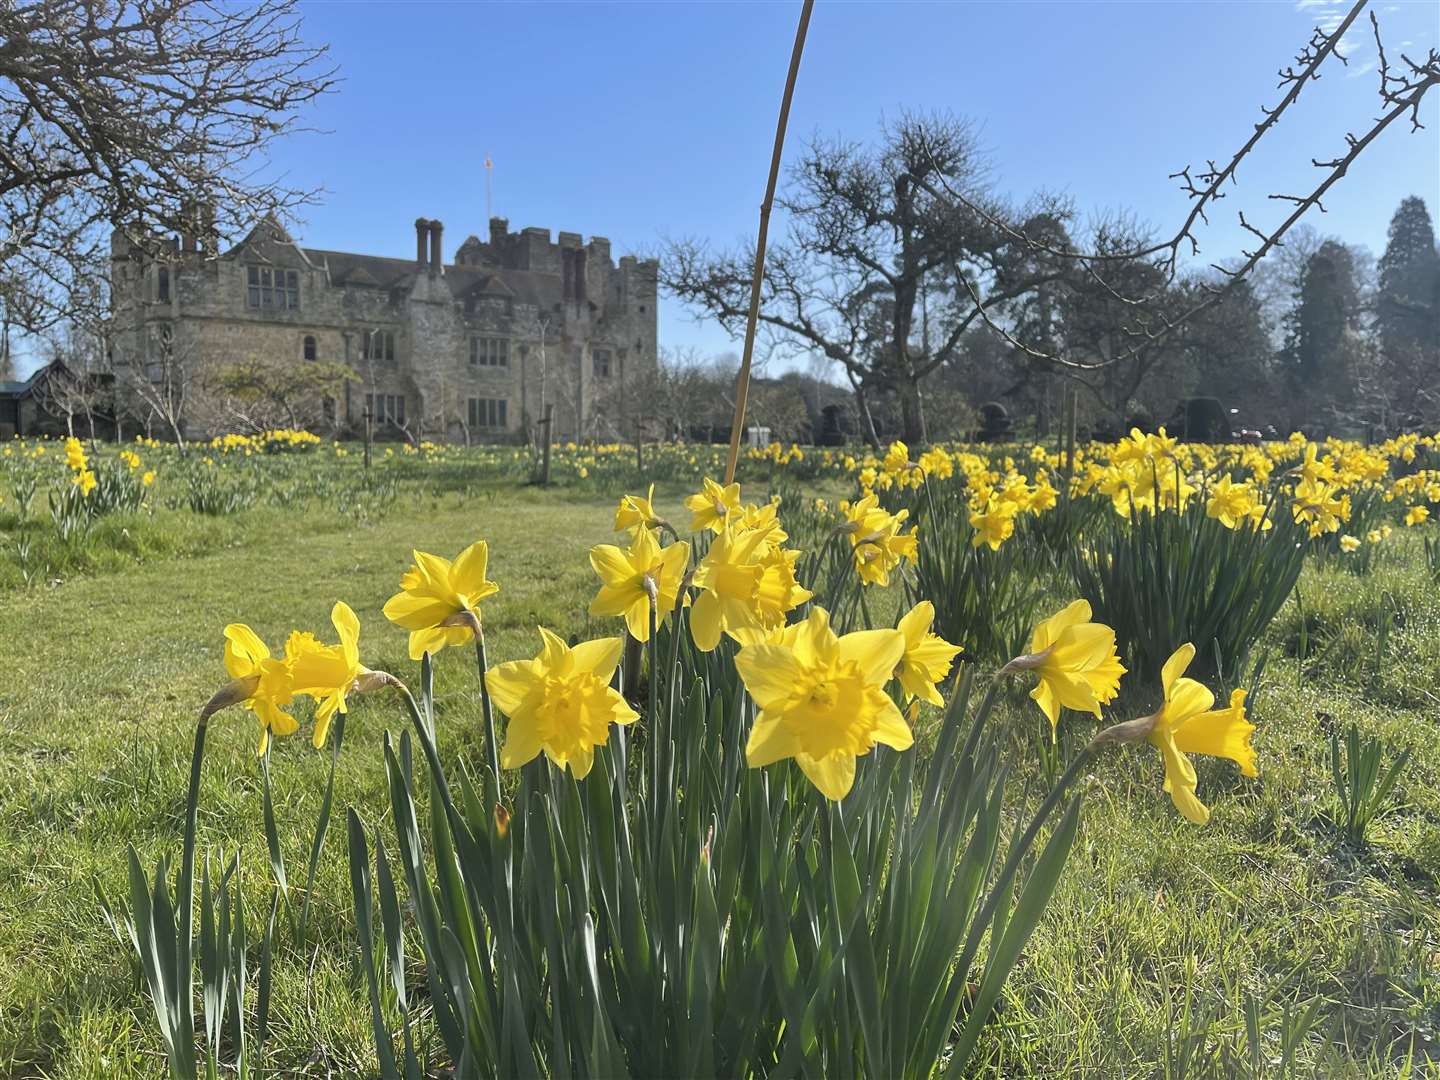 Daffodils in Anne Boleyn’s orchard. Picture: Vikki Rimmer